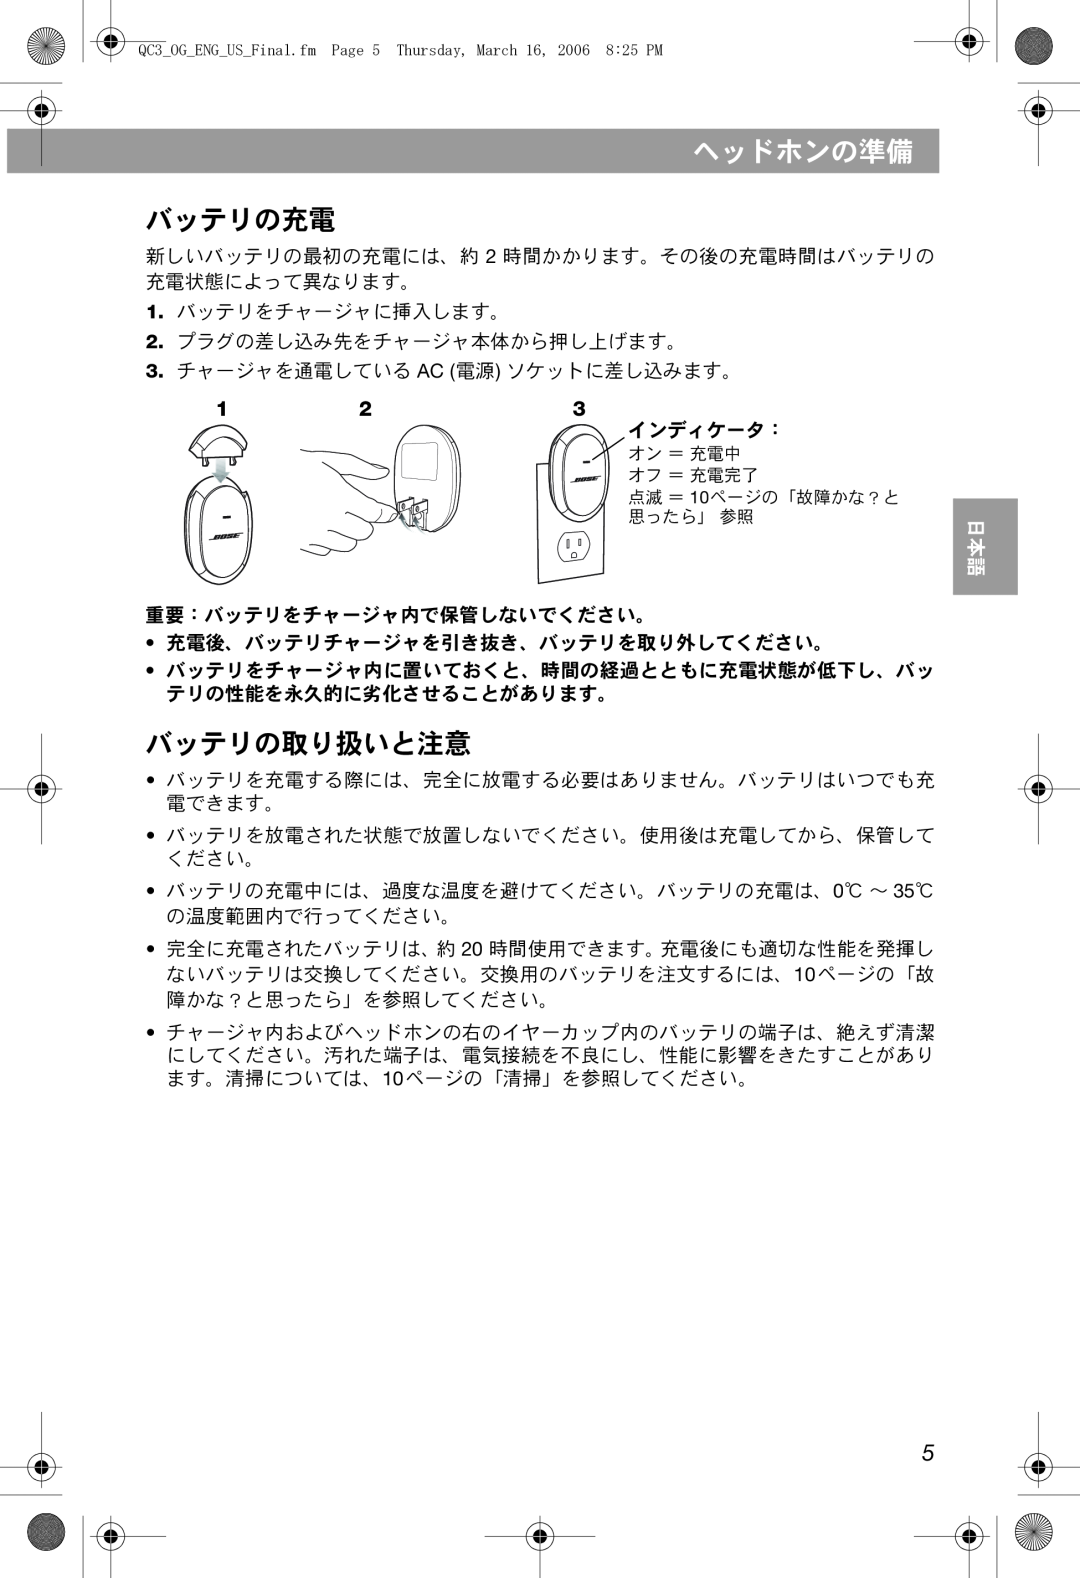 Bose QuietComfort 3 manual ヘッドホンの準備, バッテリの充電, バッテリの取り扱いと注意, Thai Korean S. Chinese Tr. Chinese Arabic 